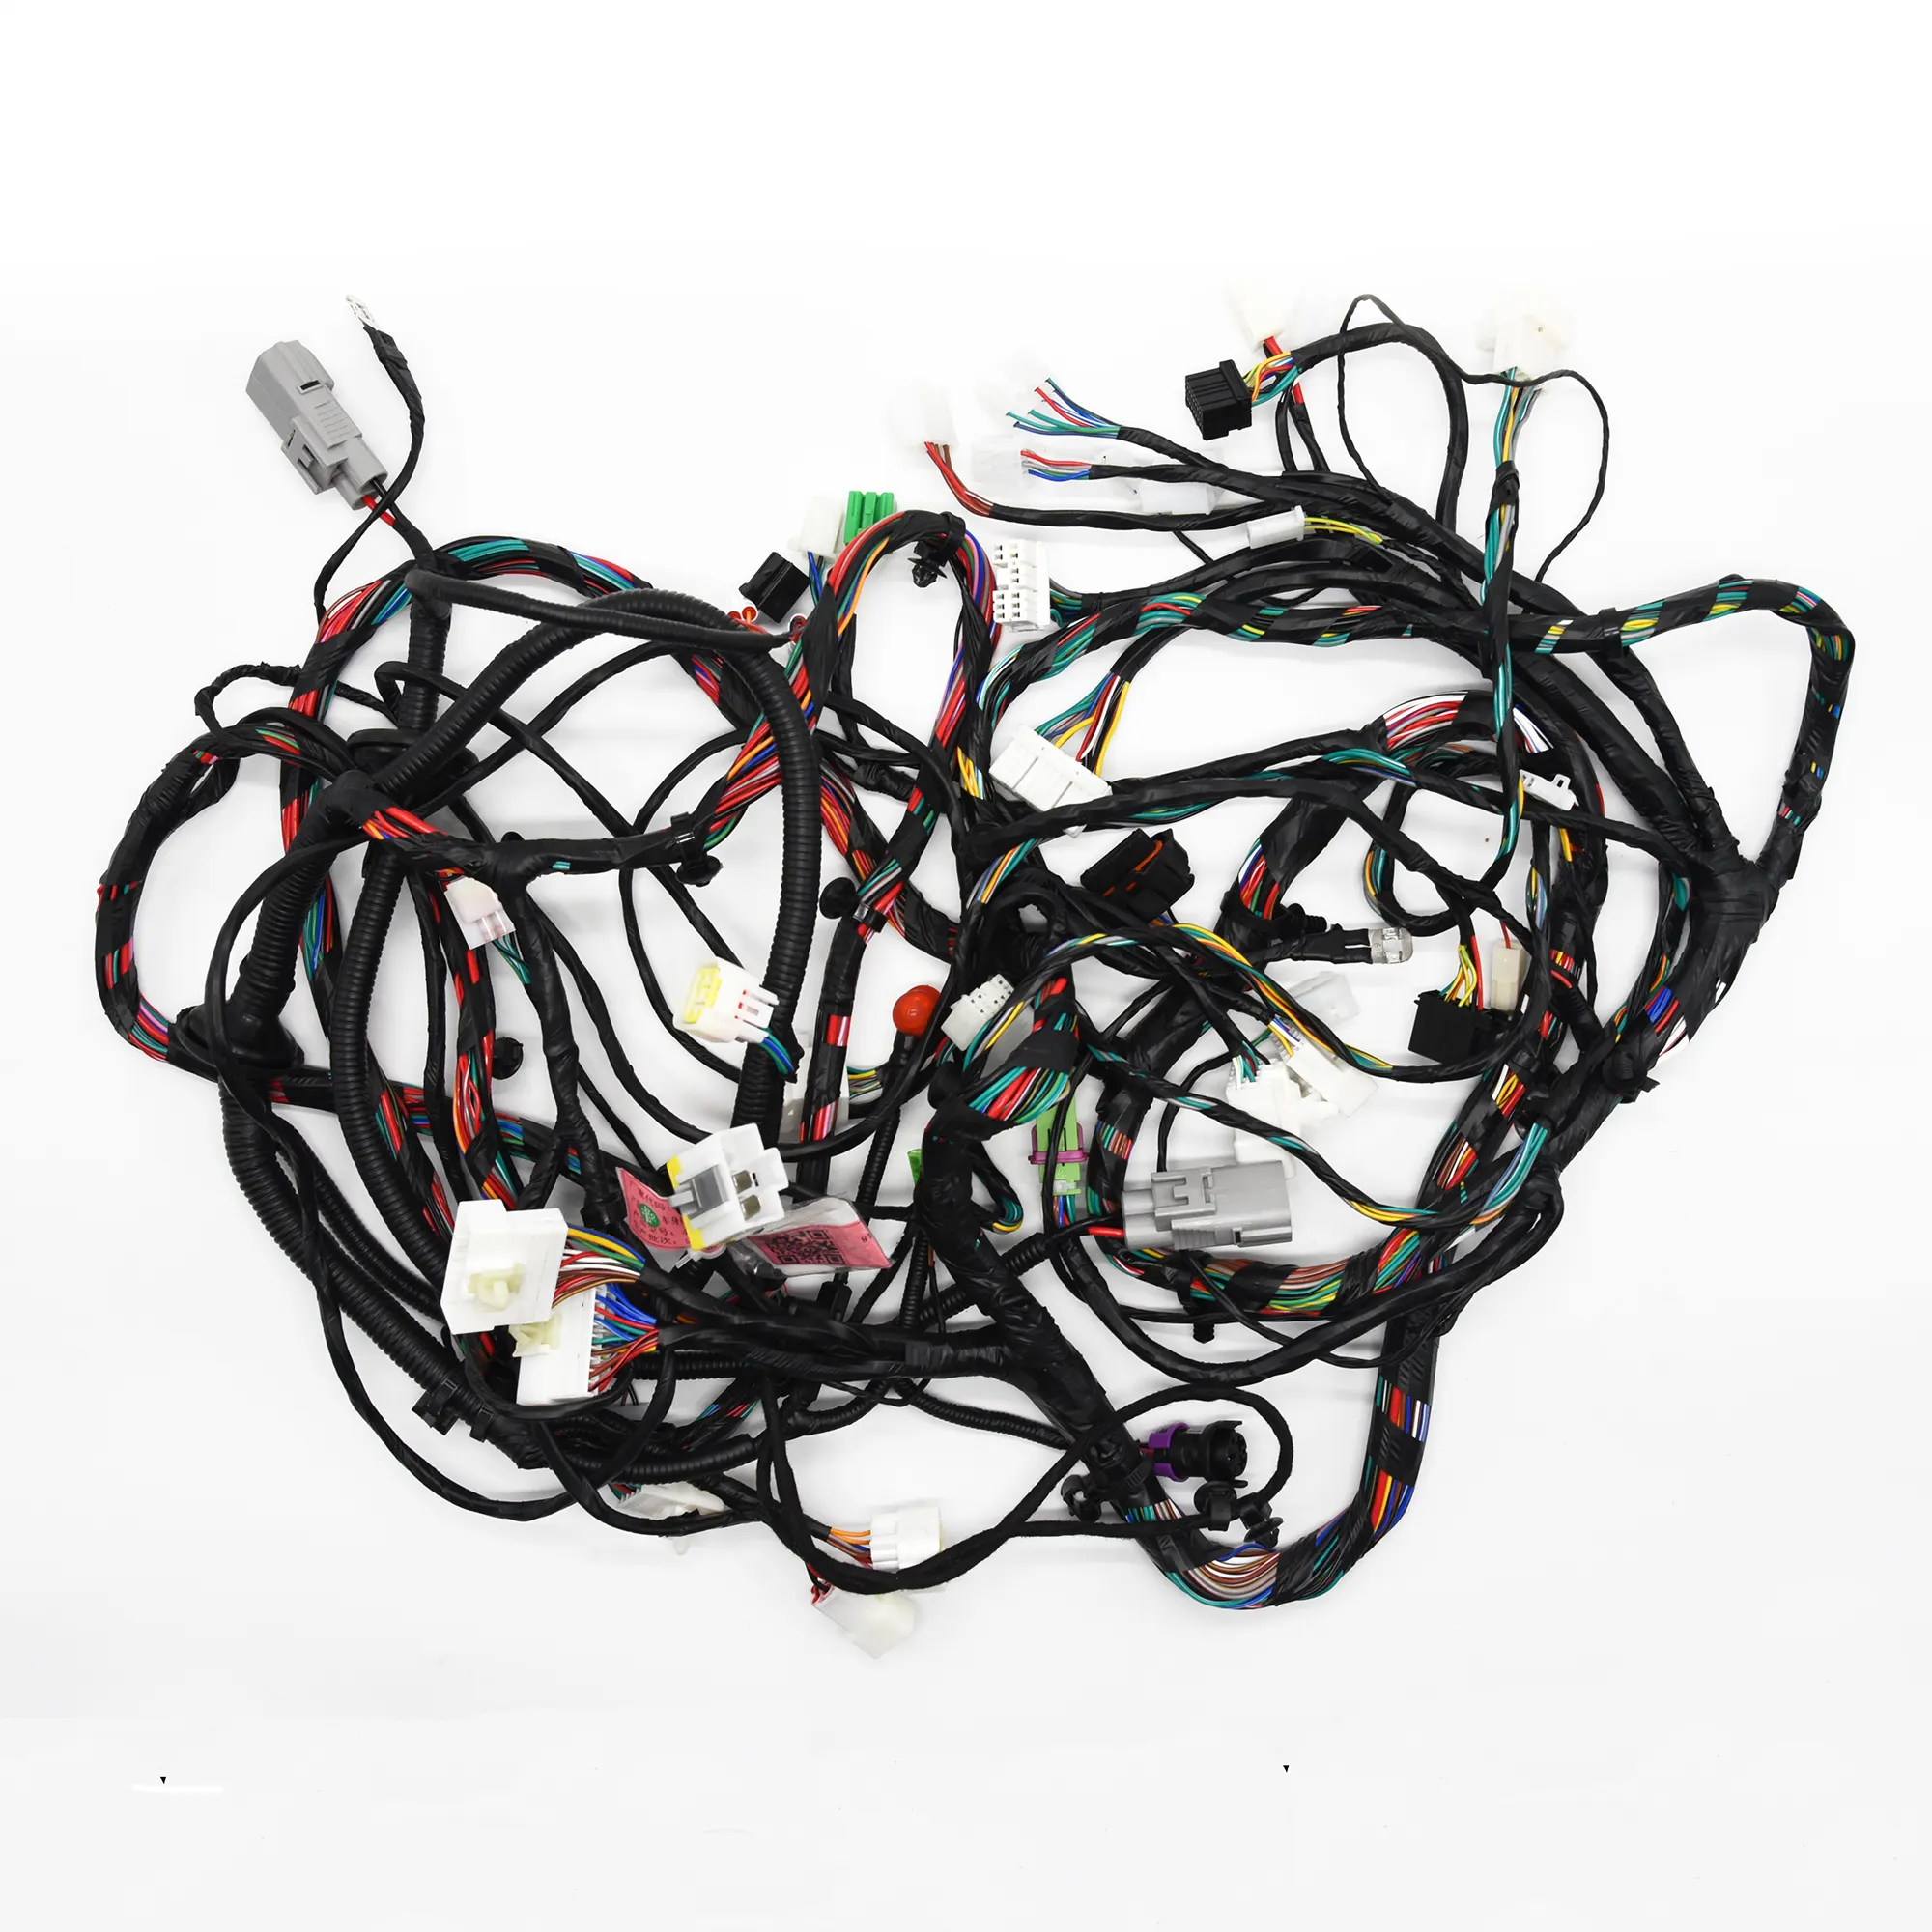 Kit de cable de motocicleta eléctrica personalizado arnés de cables de automoción telar de cables de coche